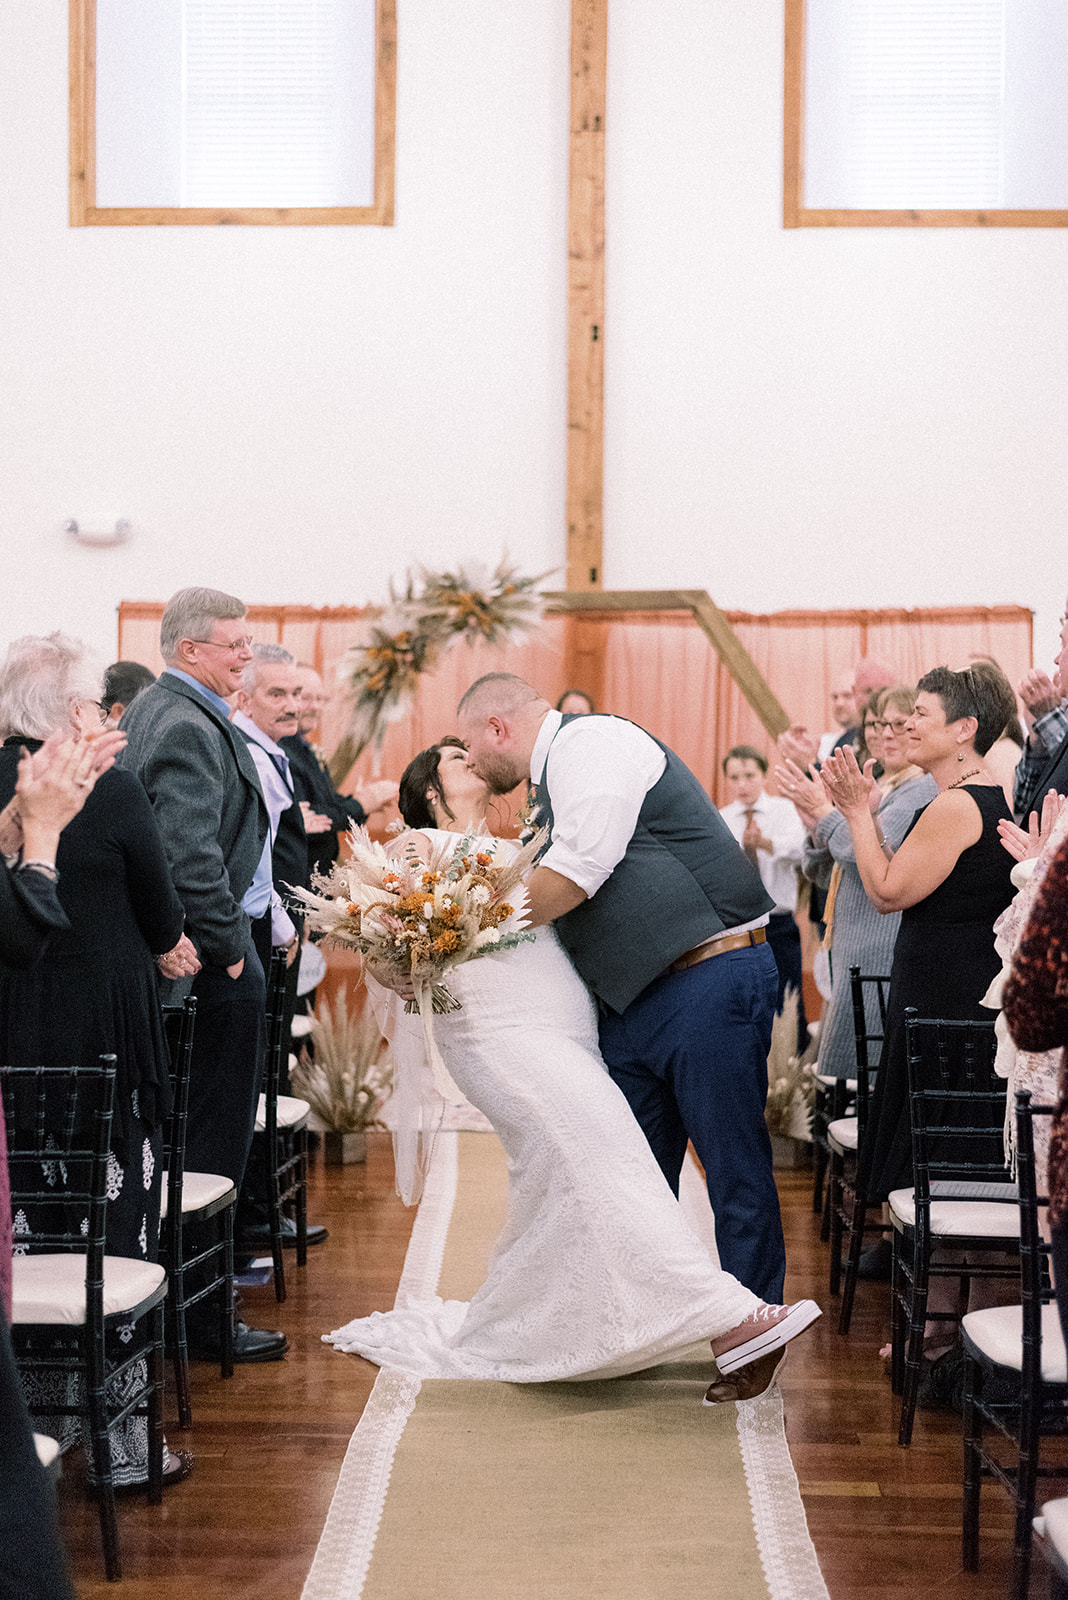 Pennsylvania wedding photographer captures bride and groom dip kiss